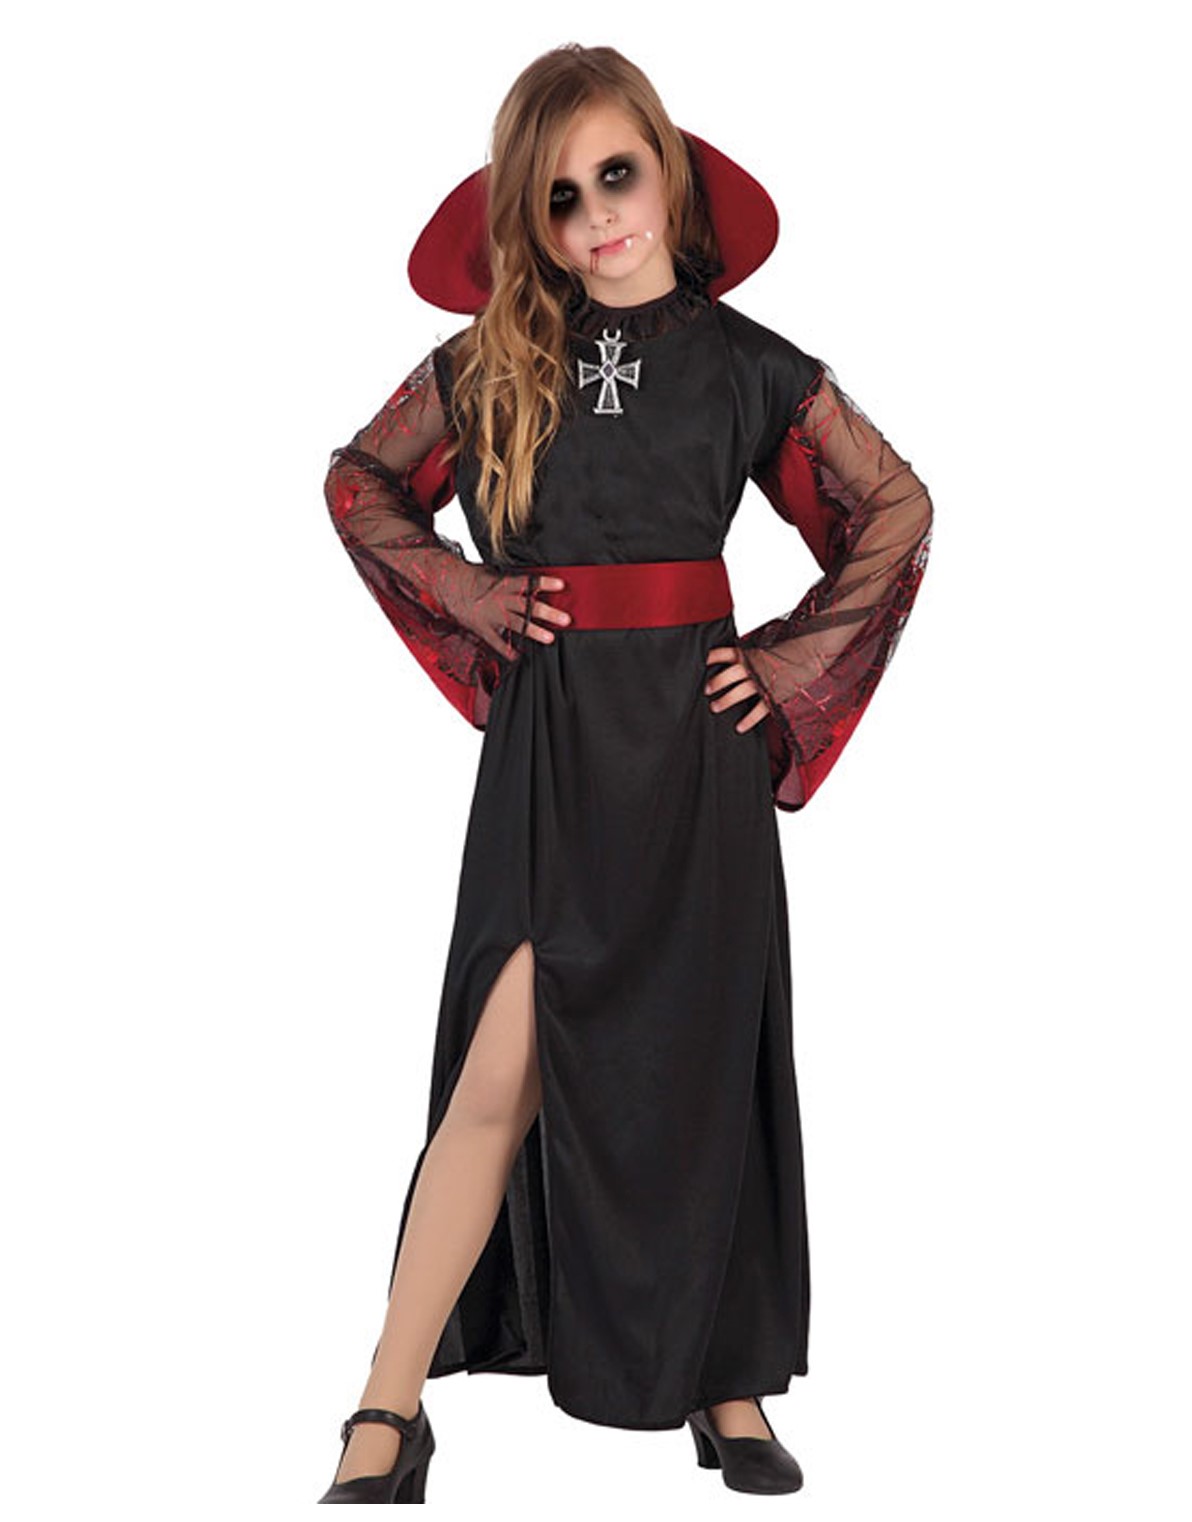 Comprar Disfraz de Vampiresa con Cuello para niña para Halloween -  carnavalandia